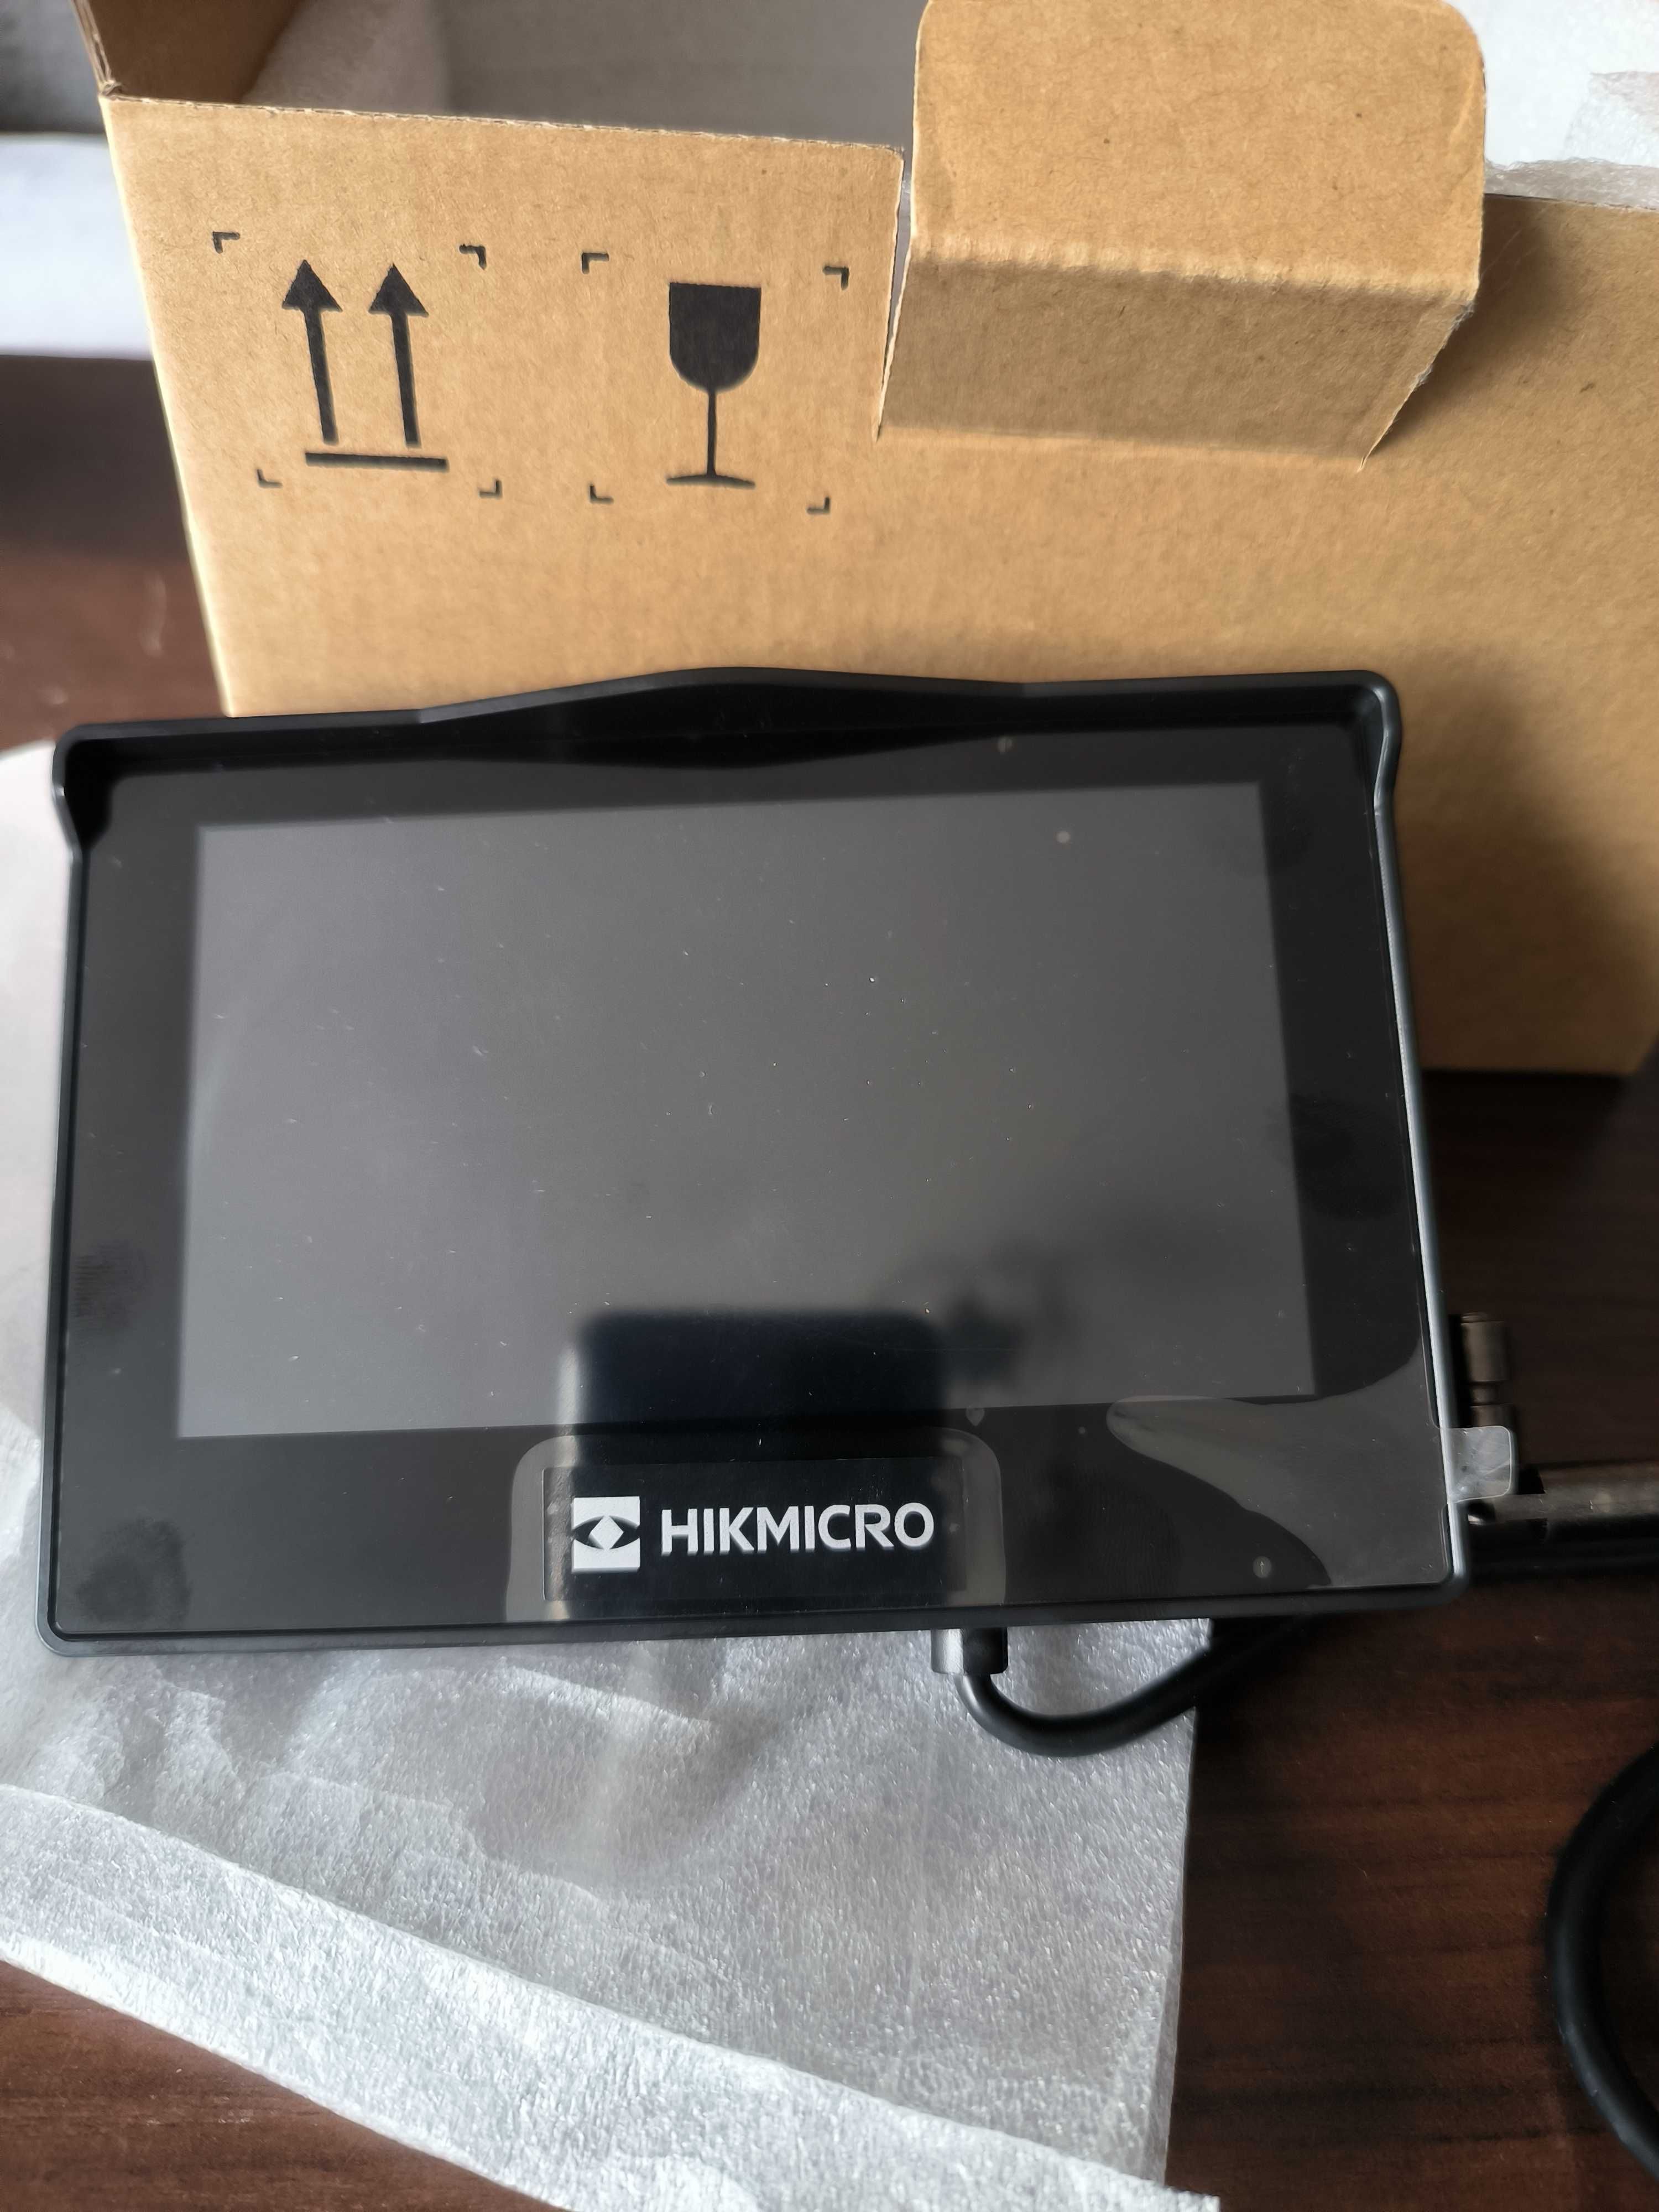 Ekran 5' Hikmicro Monokular Monitor screen nie używany na gwarancji.